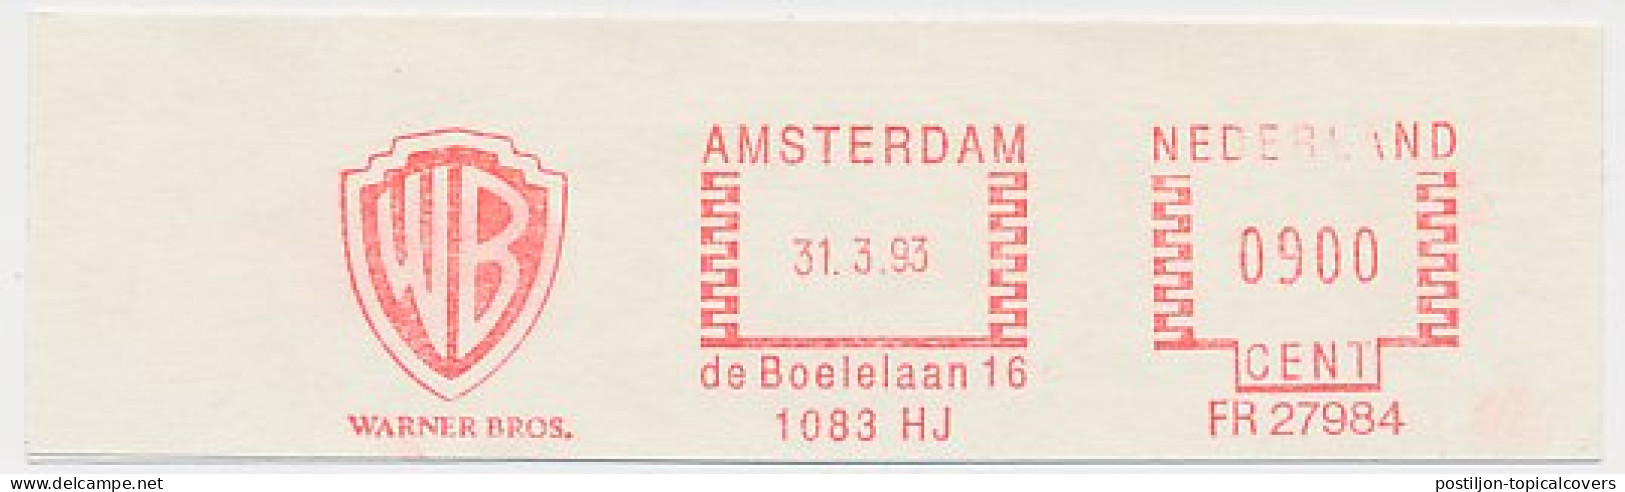 Meter Cut Netherlands 1993 - Frama 27984 Warner Bros. - Film